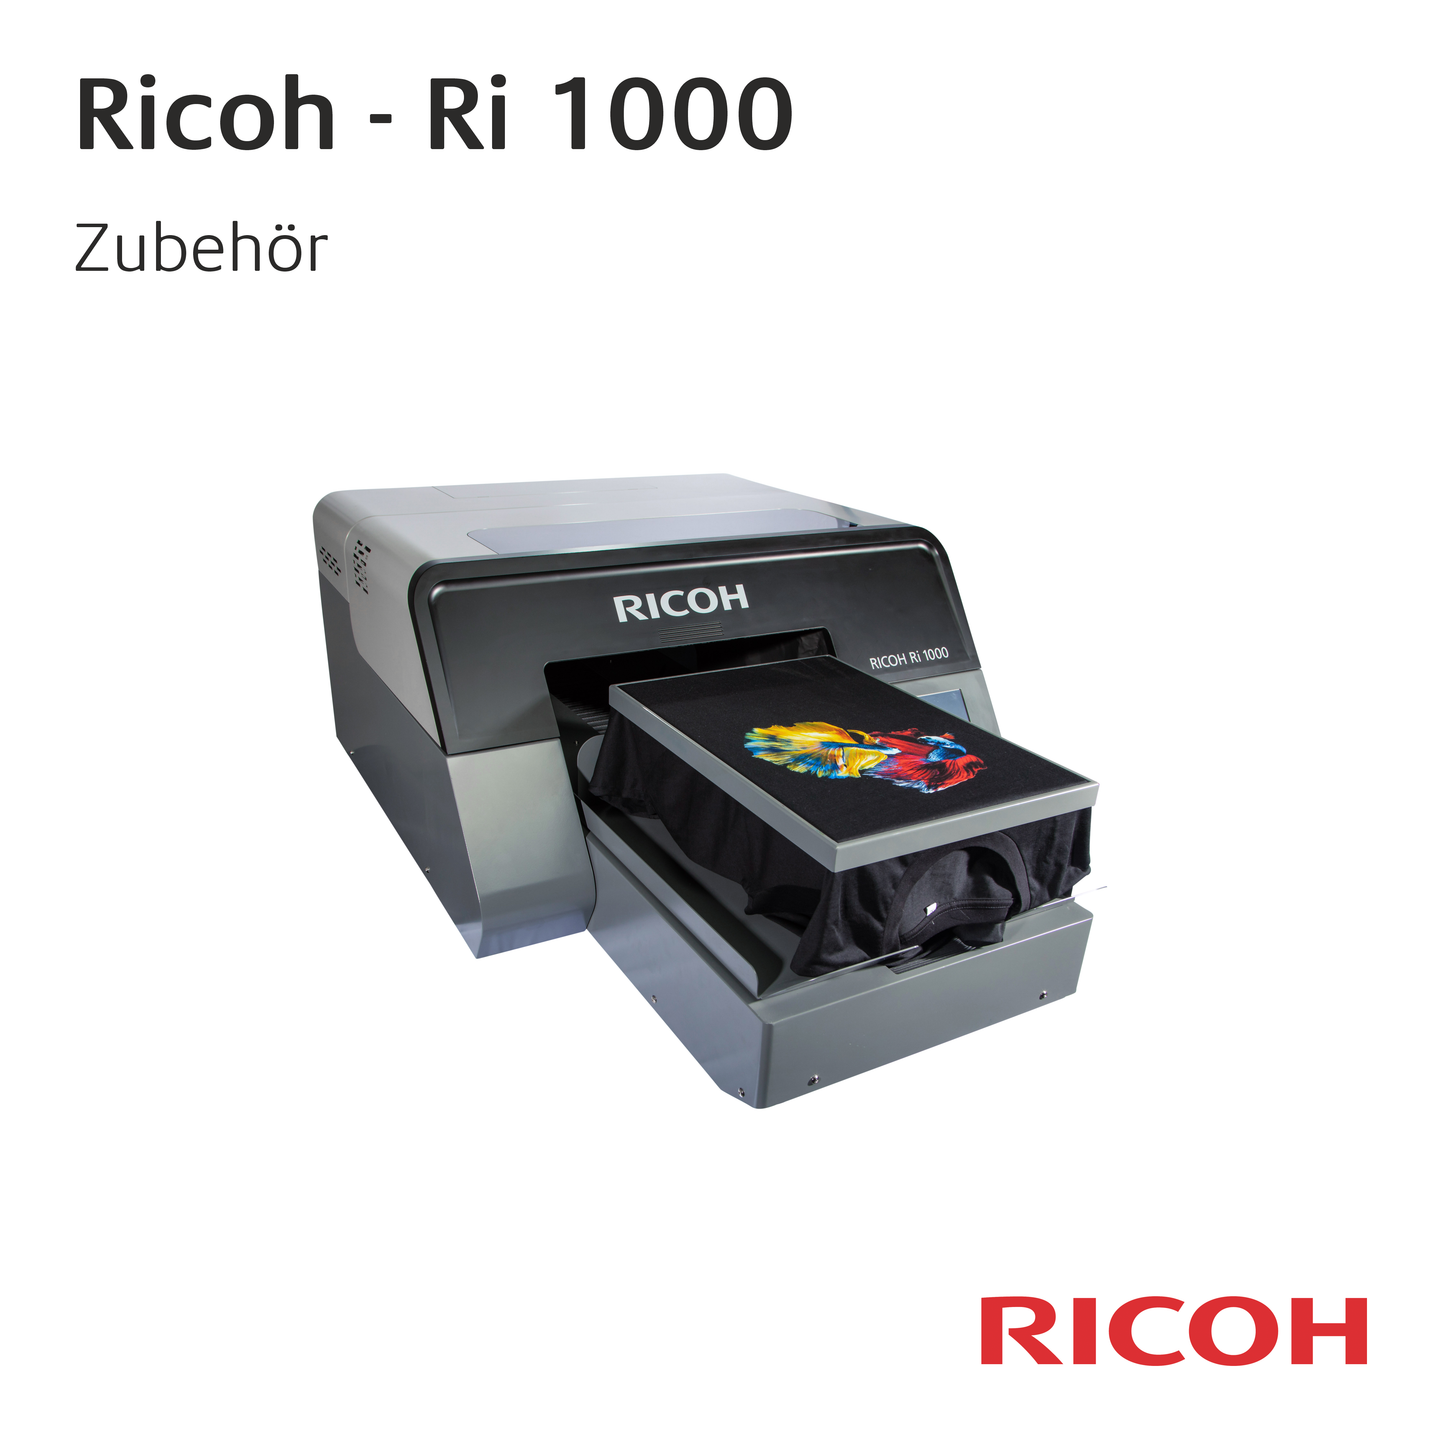 Ricoh Ri 1000 - Zubehör